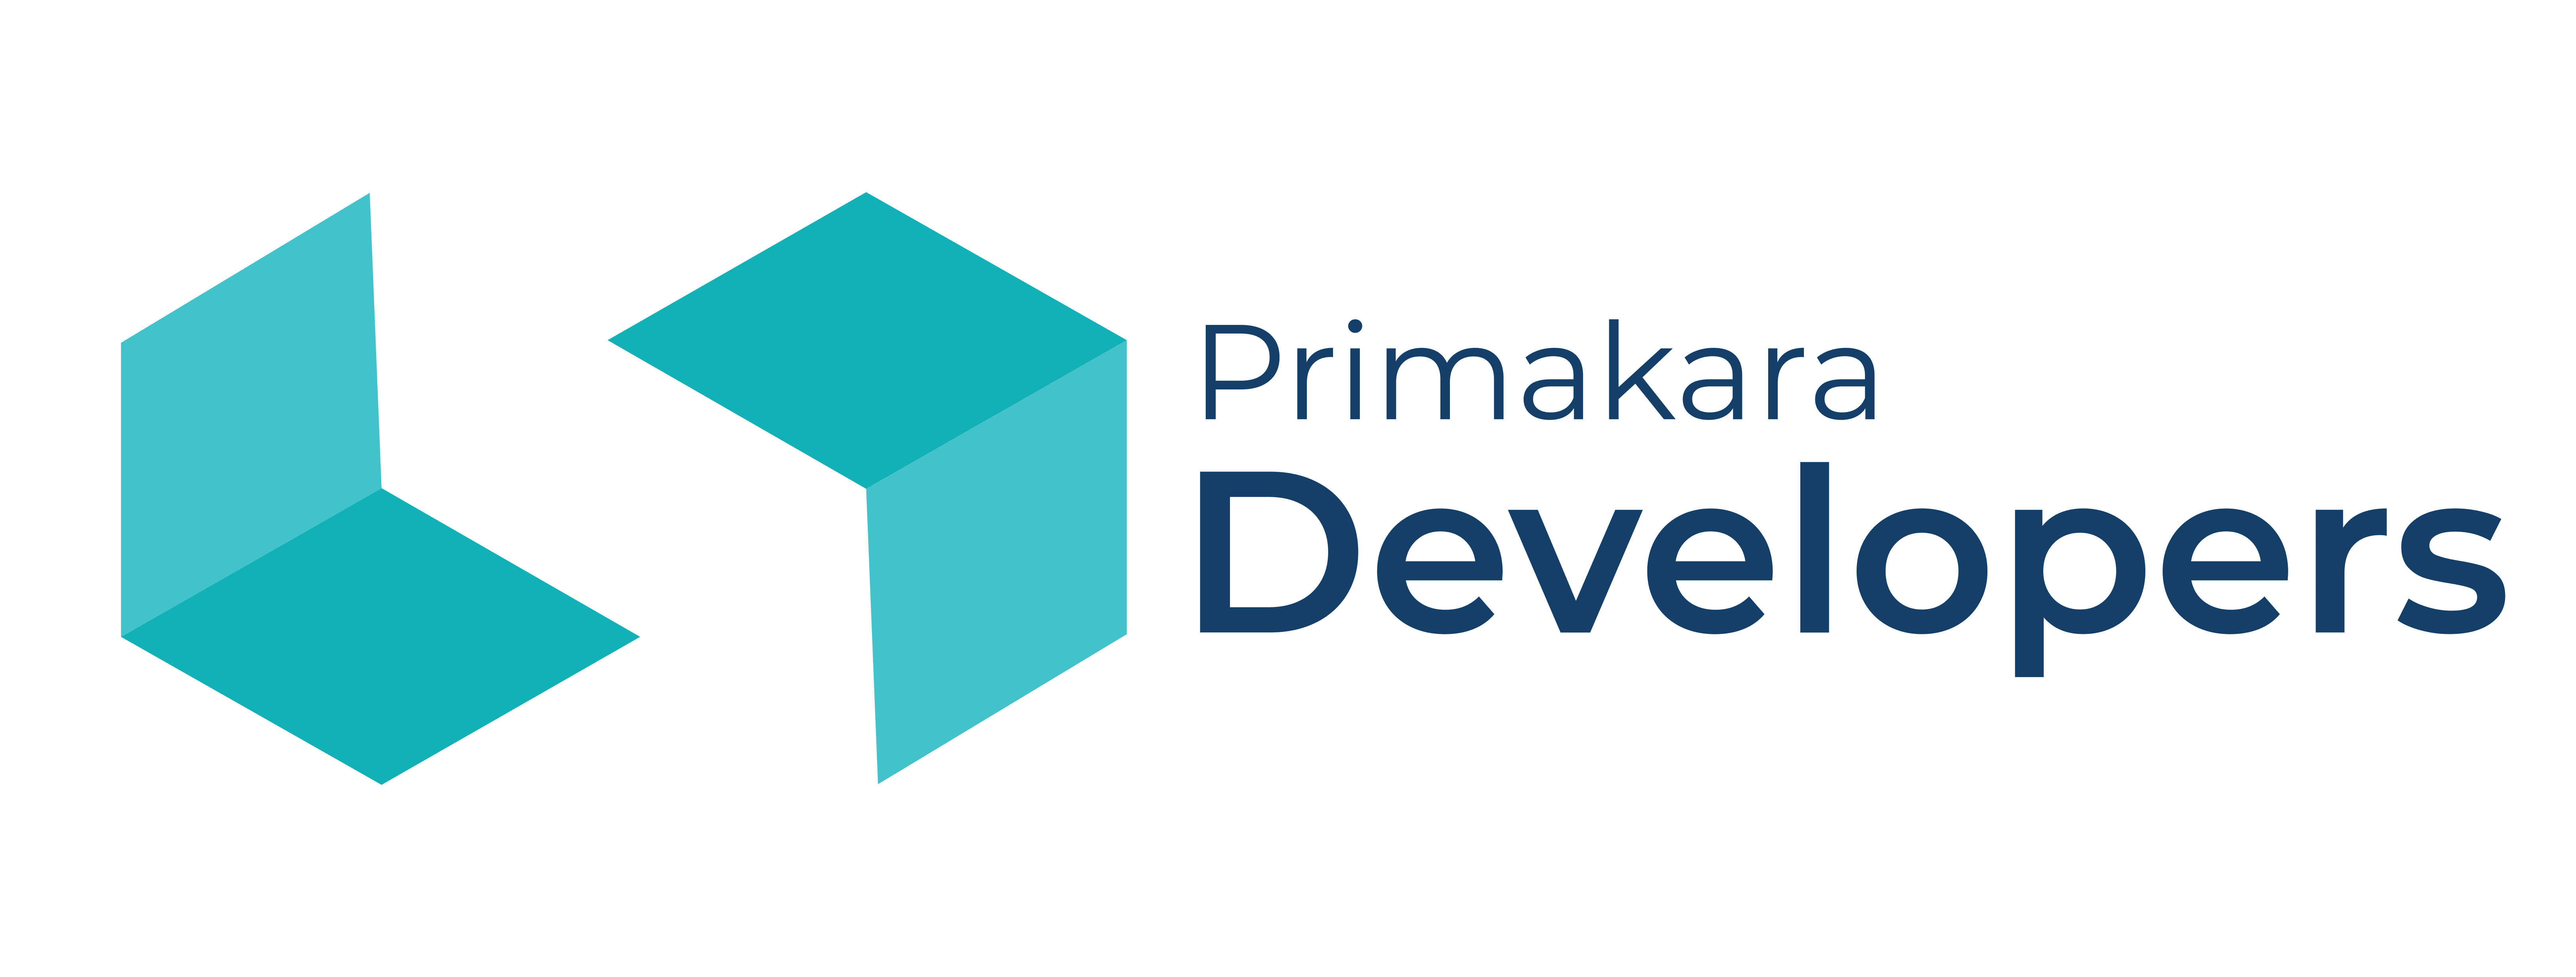 Primakara Developers logo